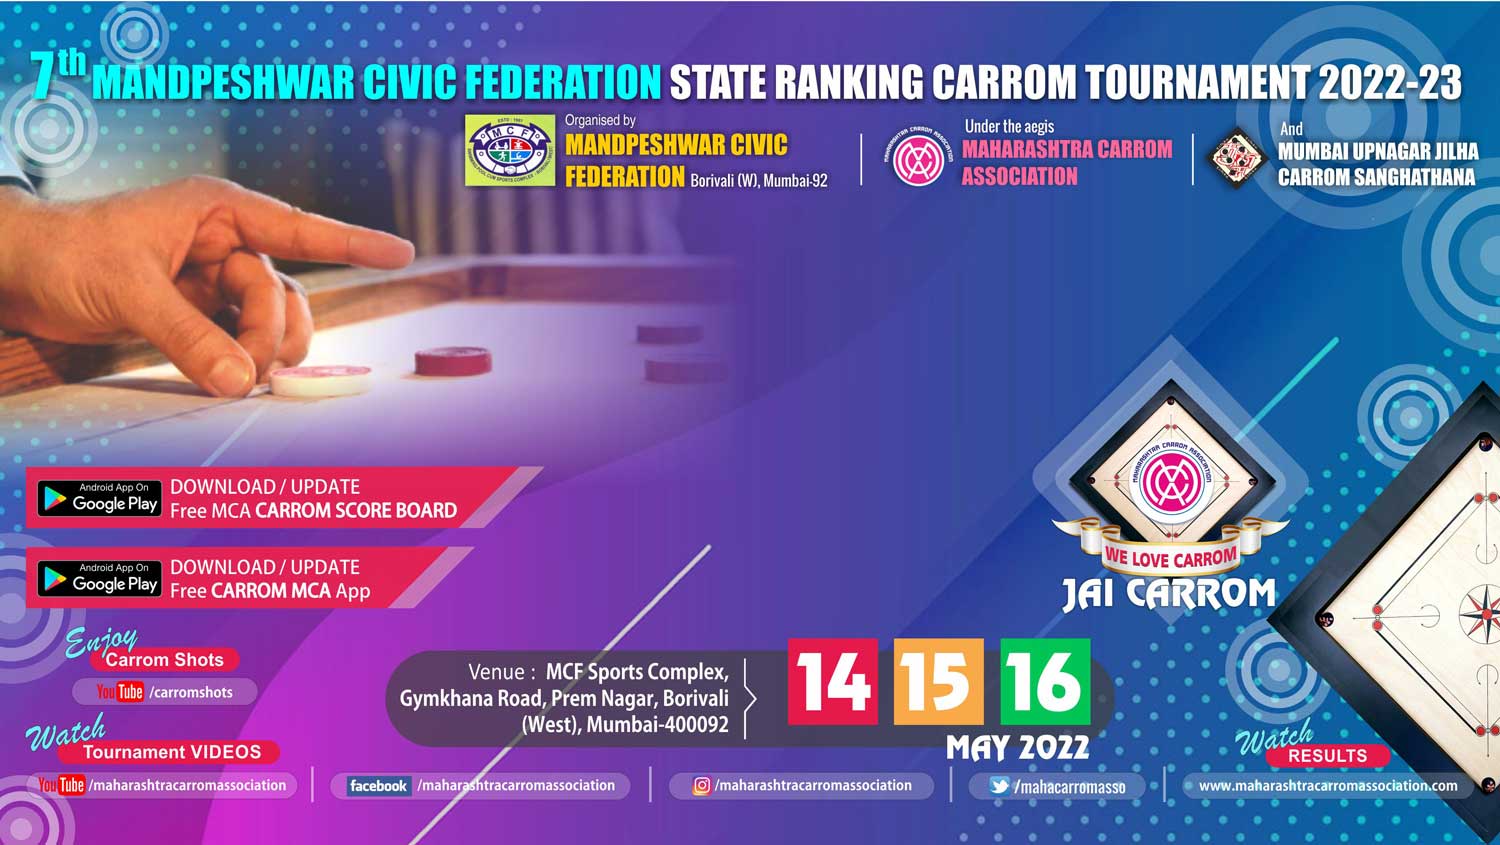 7th Mandpeshwar Civic Federation State Ranking Carrom Tournament 2022-23